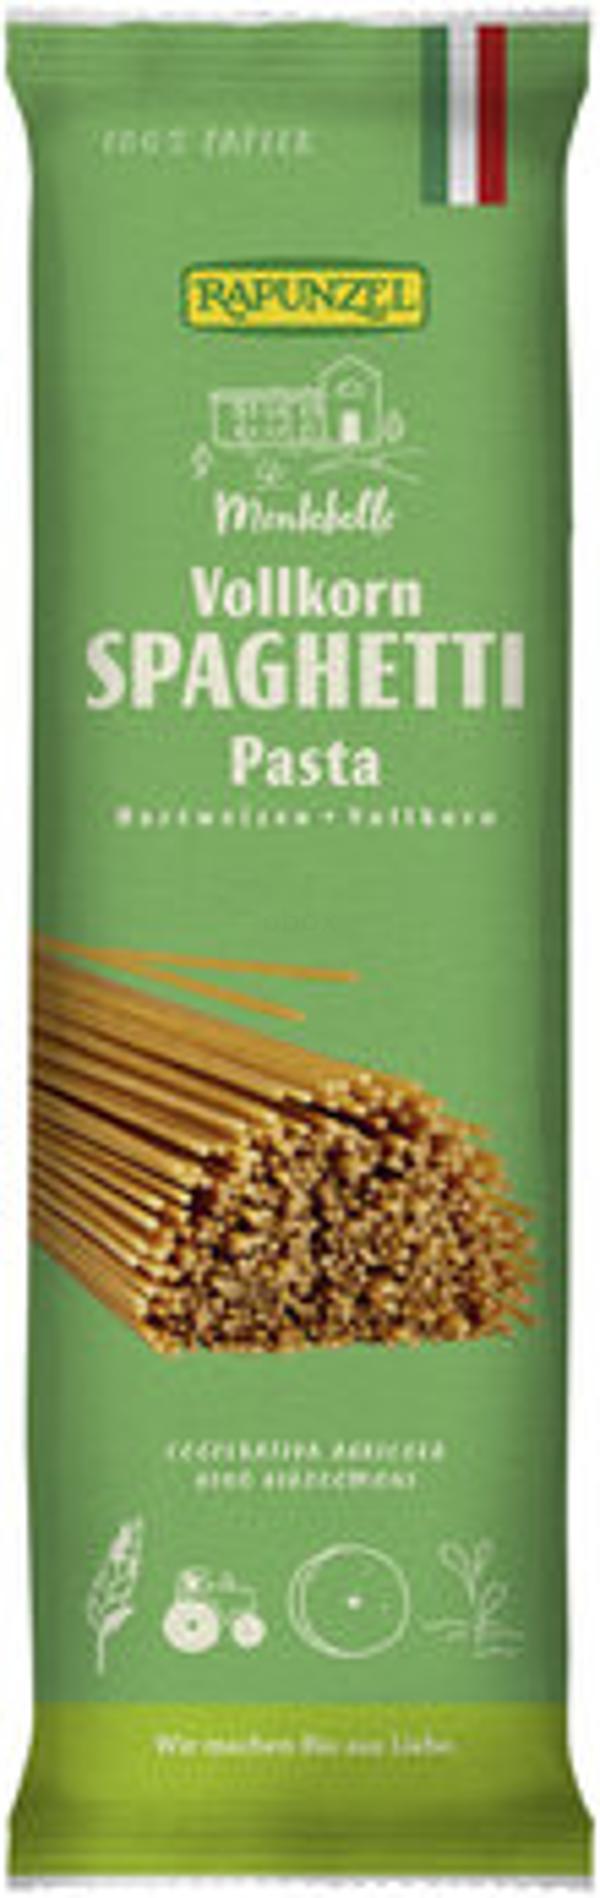 Produktfoto zu Spaghetti Vollkorn